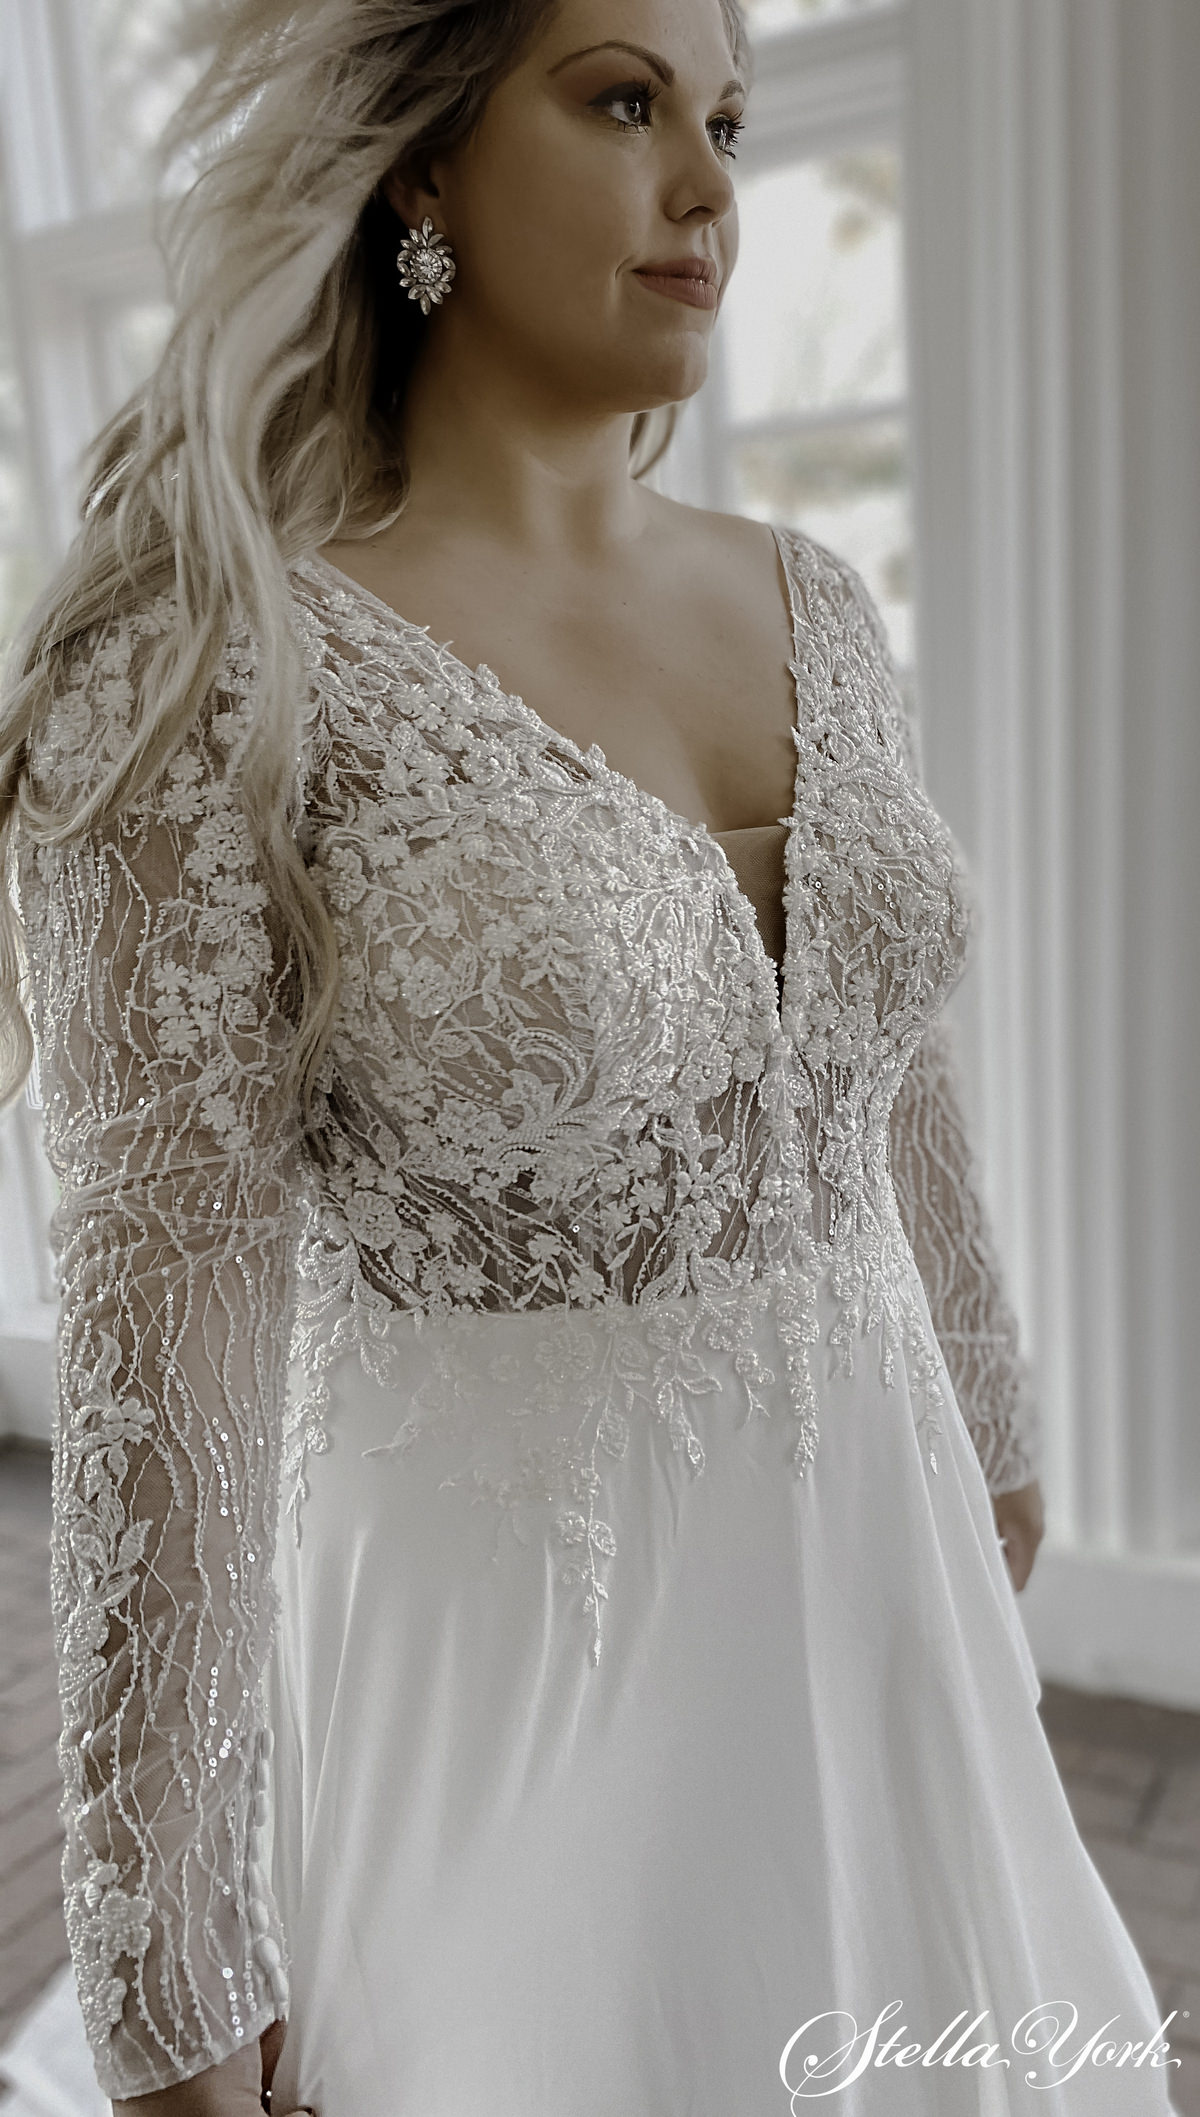 Lace Wedding Dress by Stella York 2020 - 7291-SS6